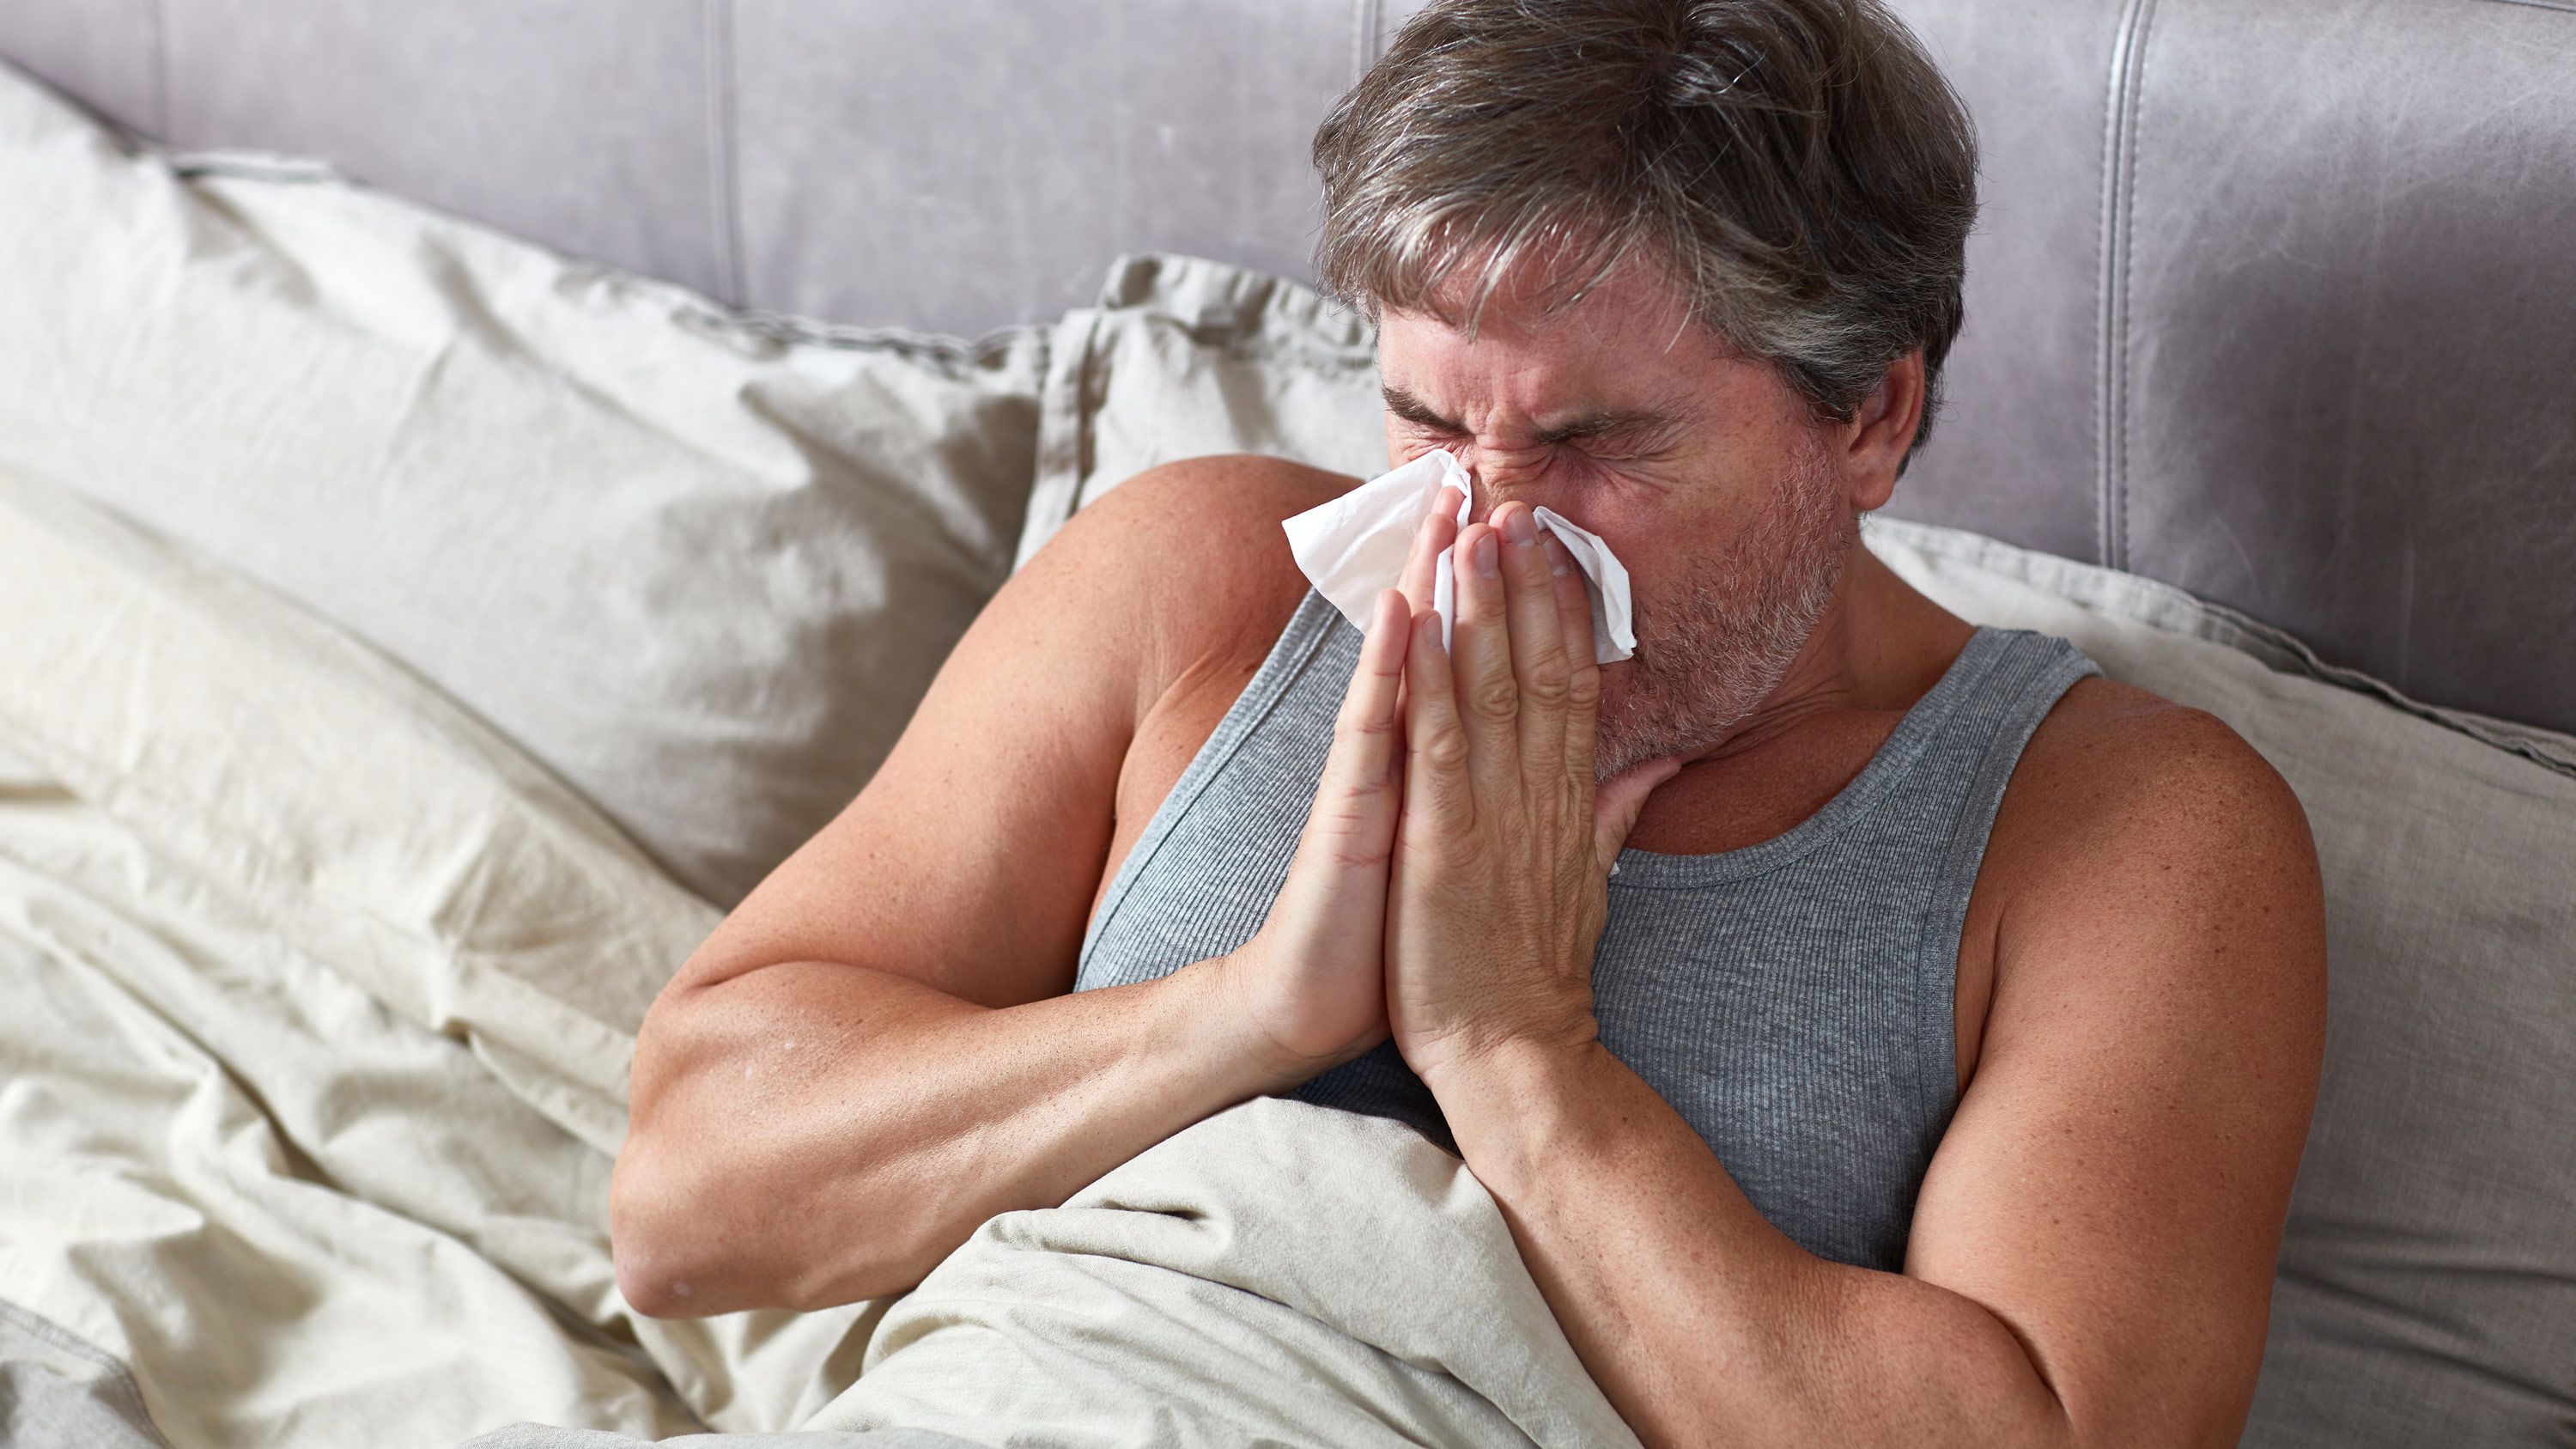 Why do men get sicker from viruses than women? New study could help explain  'man flu